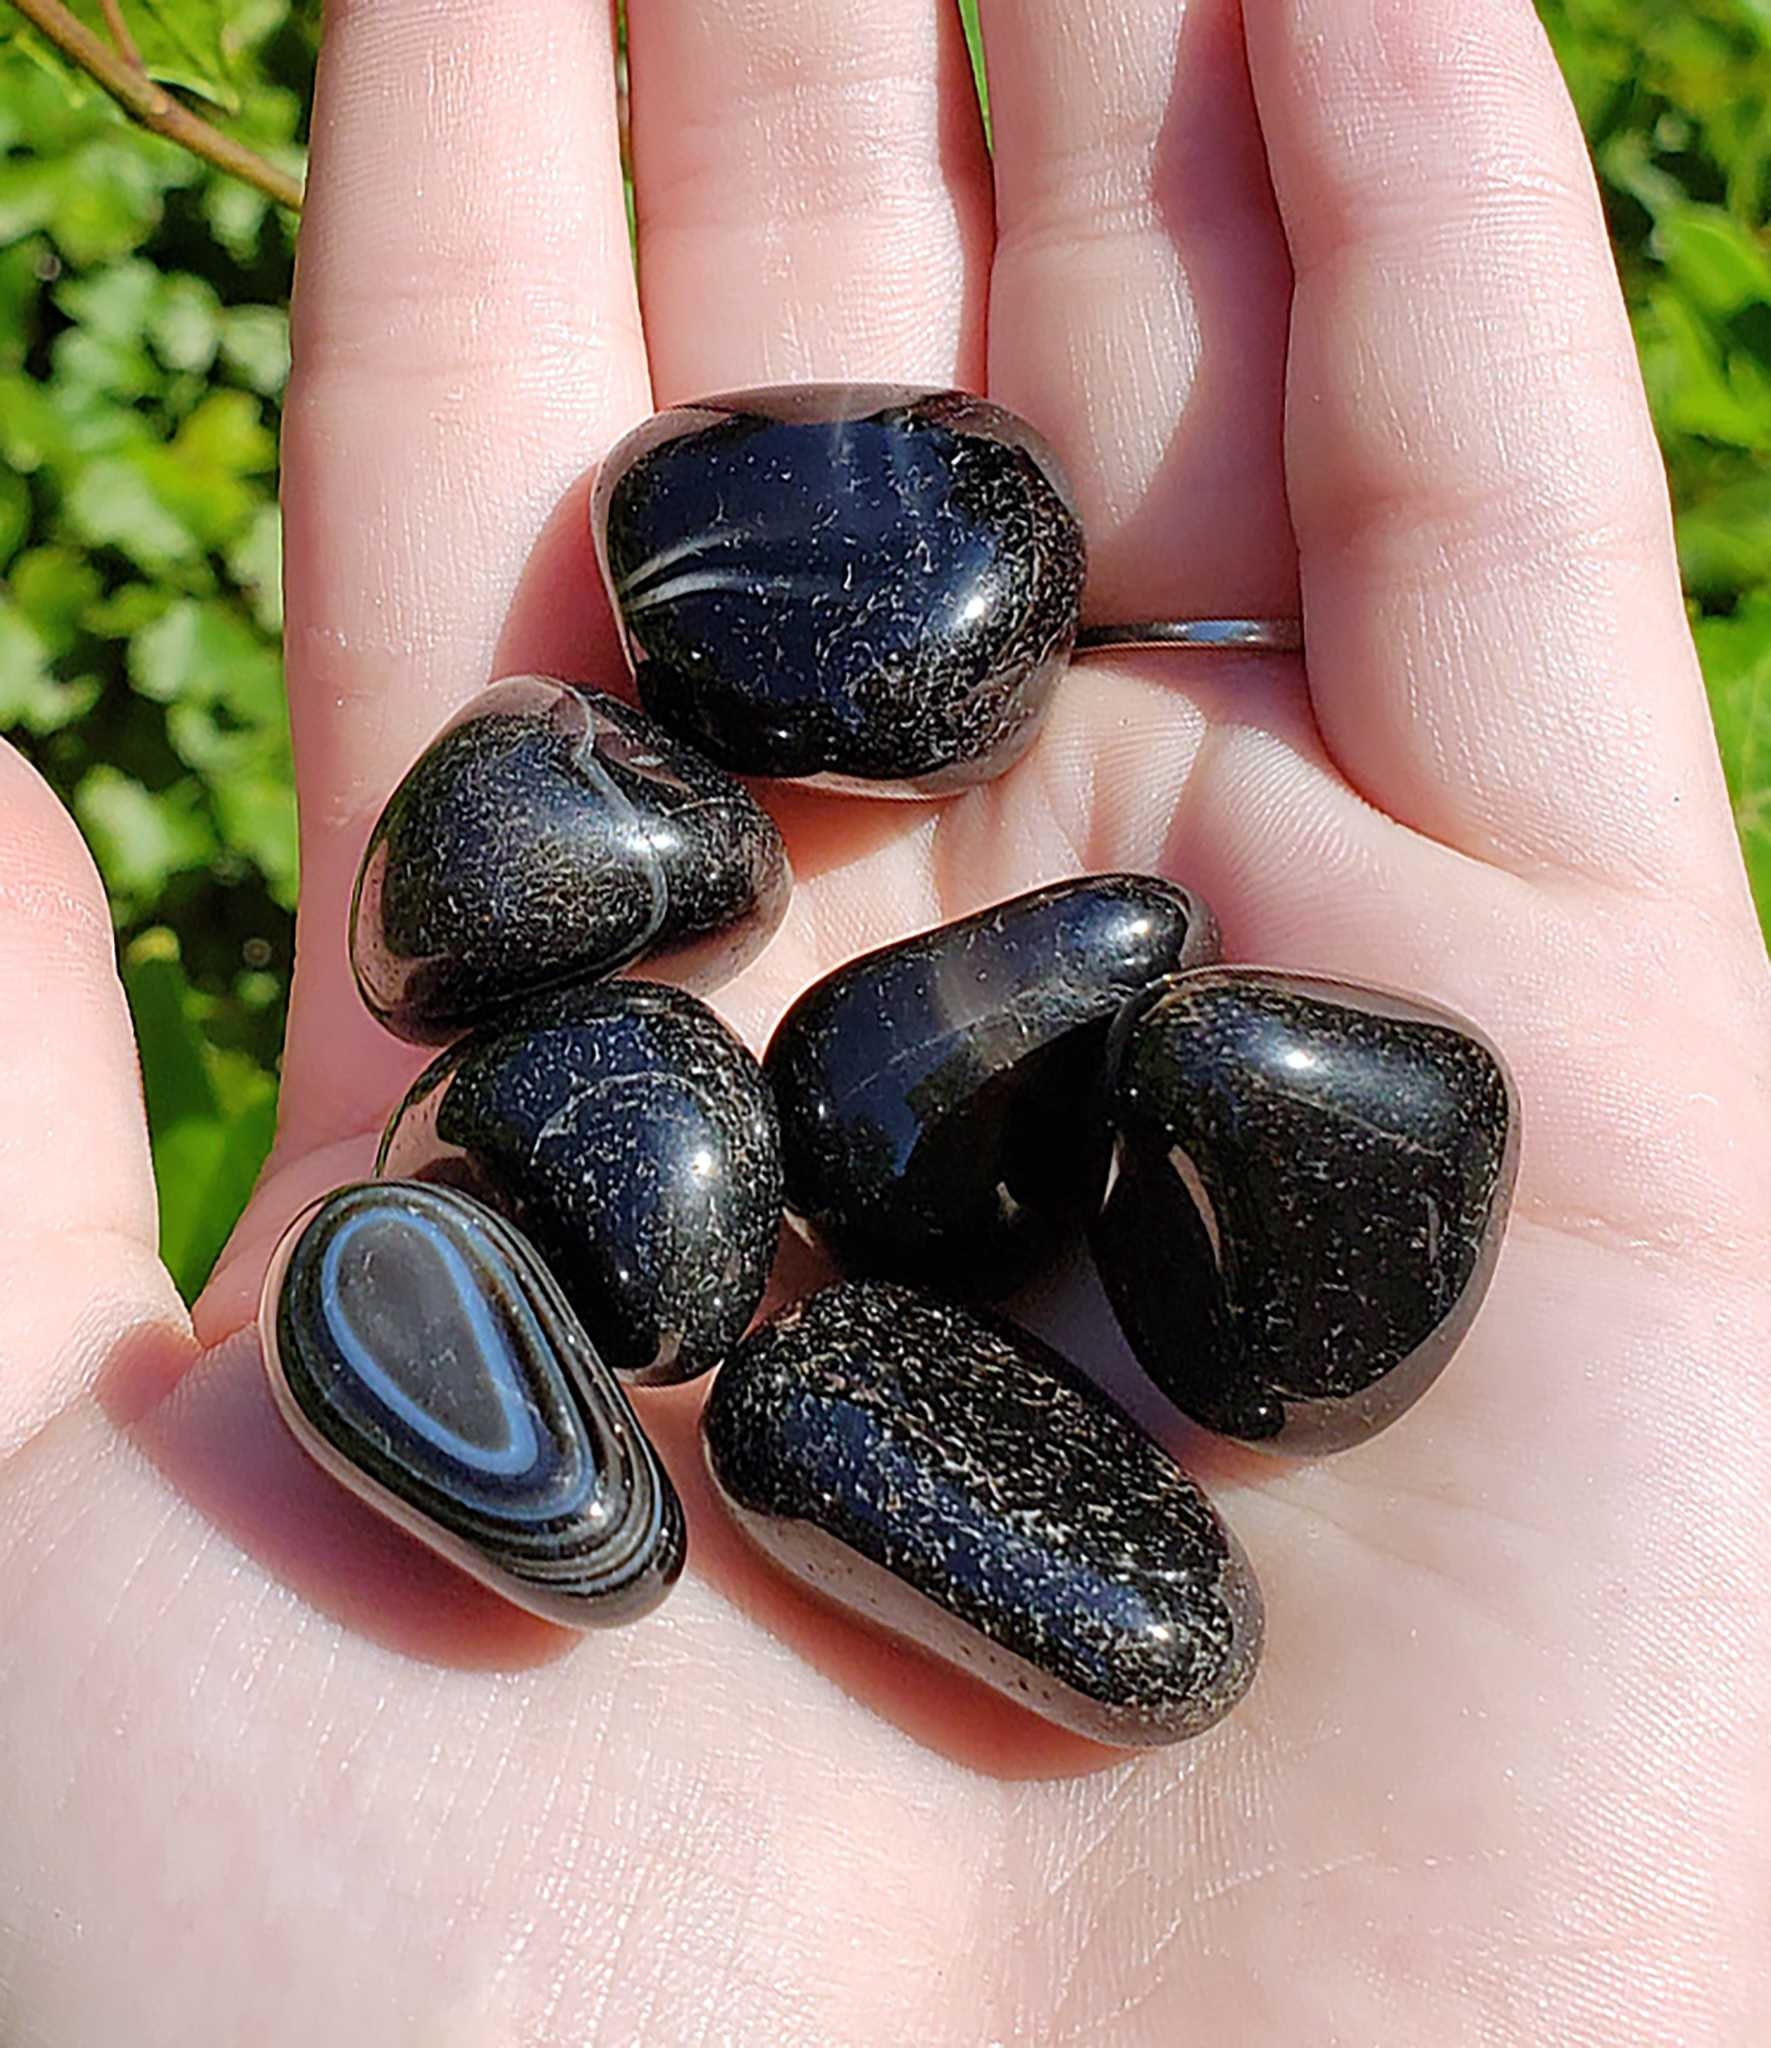 1/2 lb Black Onyx Small Tumbled Gemstone Crystals 40-60 Stones Bulk Gem  Specimen